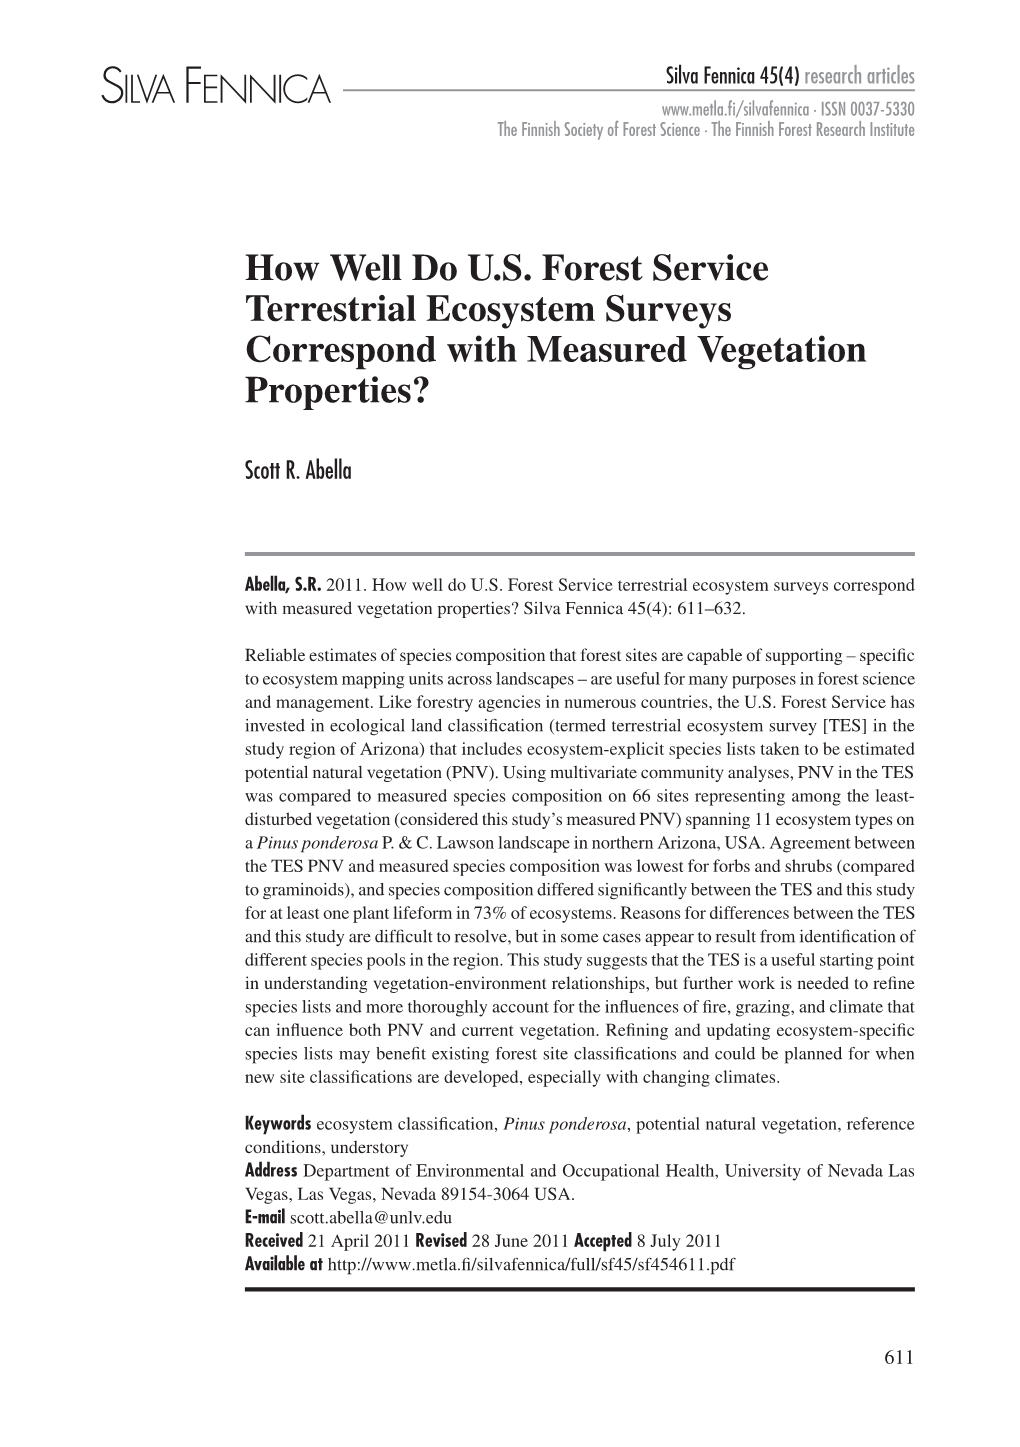 How Well Do U.S. Forest Service Terrestrial Ecosystem Surveys Correspond with Measured Vegetation Properties?